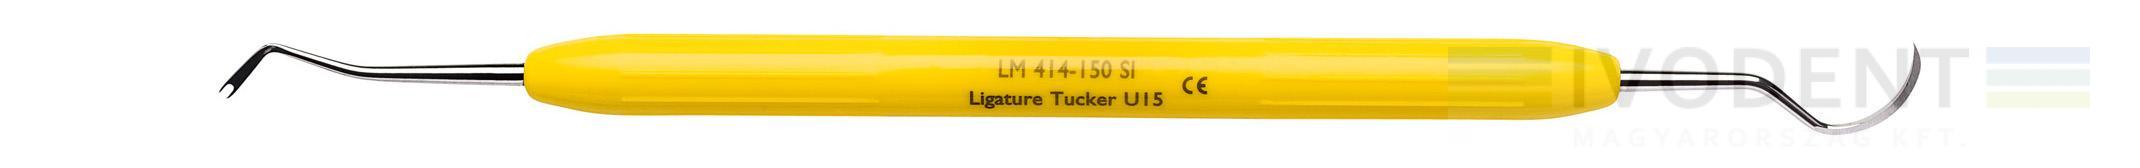 Ligature Tucker-Scaler U15